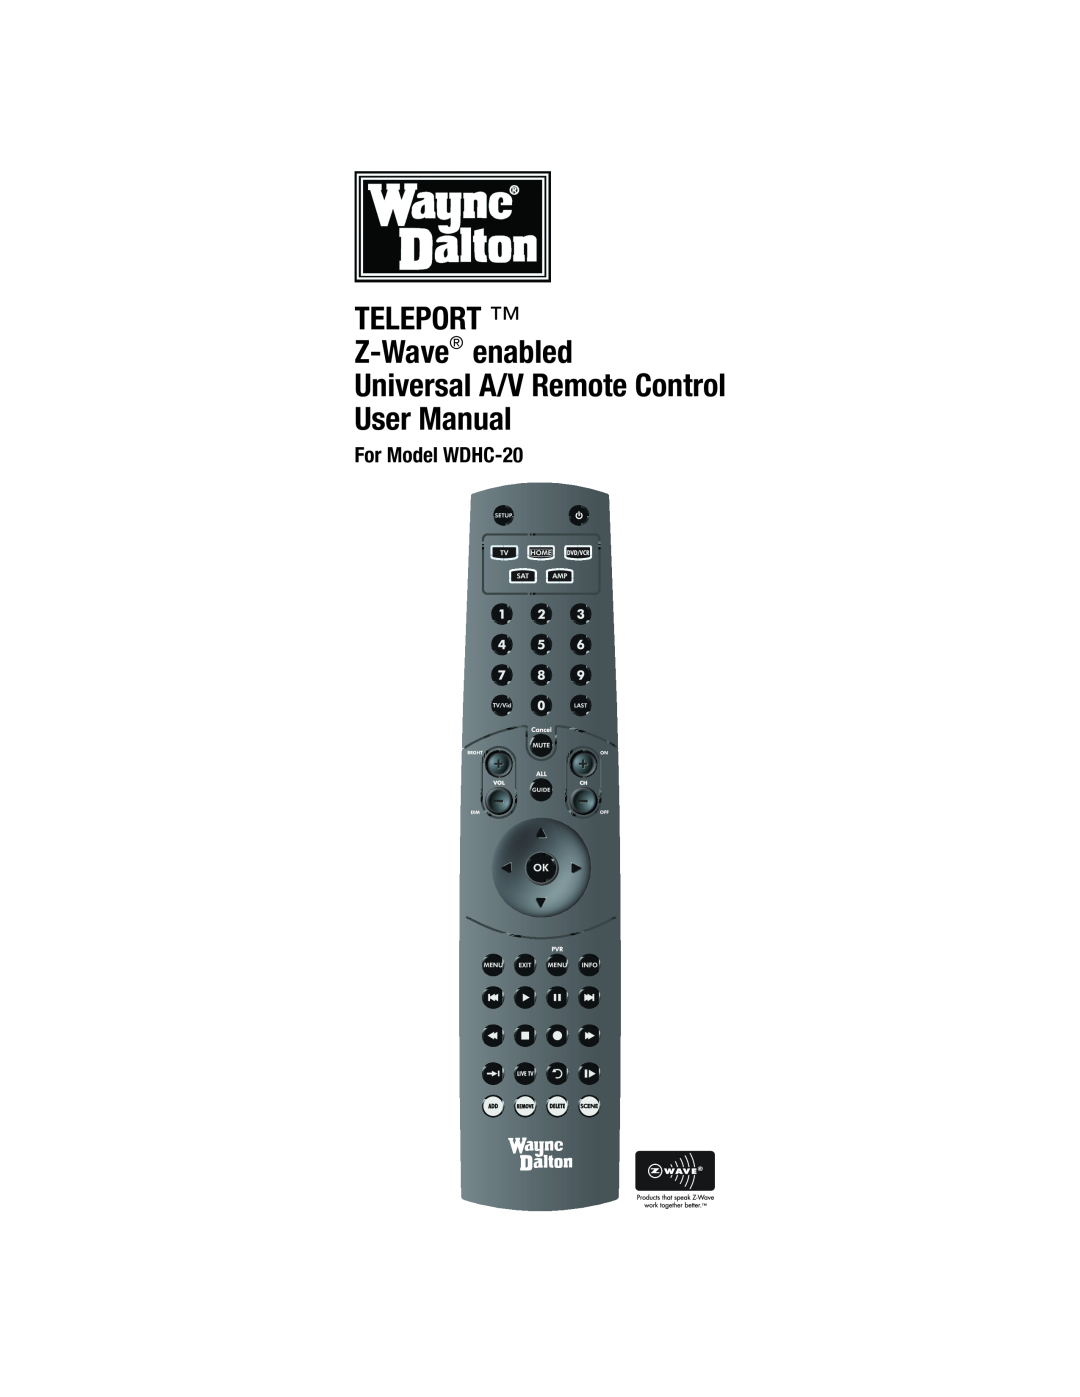 Wayne-Dalton user manual For Model WDHC-20, TELEPORT Z-Wave enabled Universal A/V Remote Control User Manual 